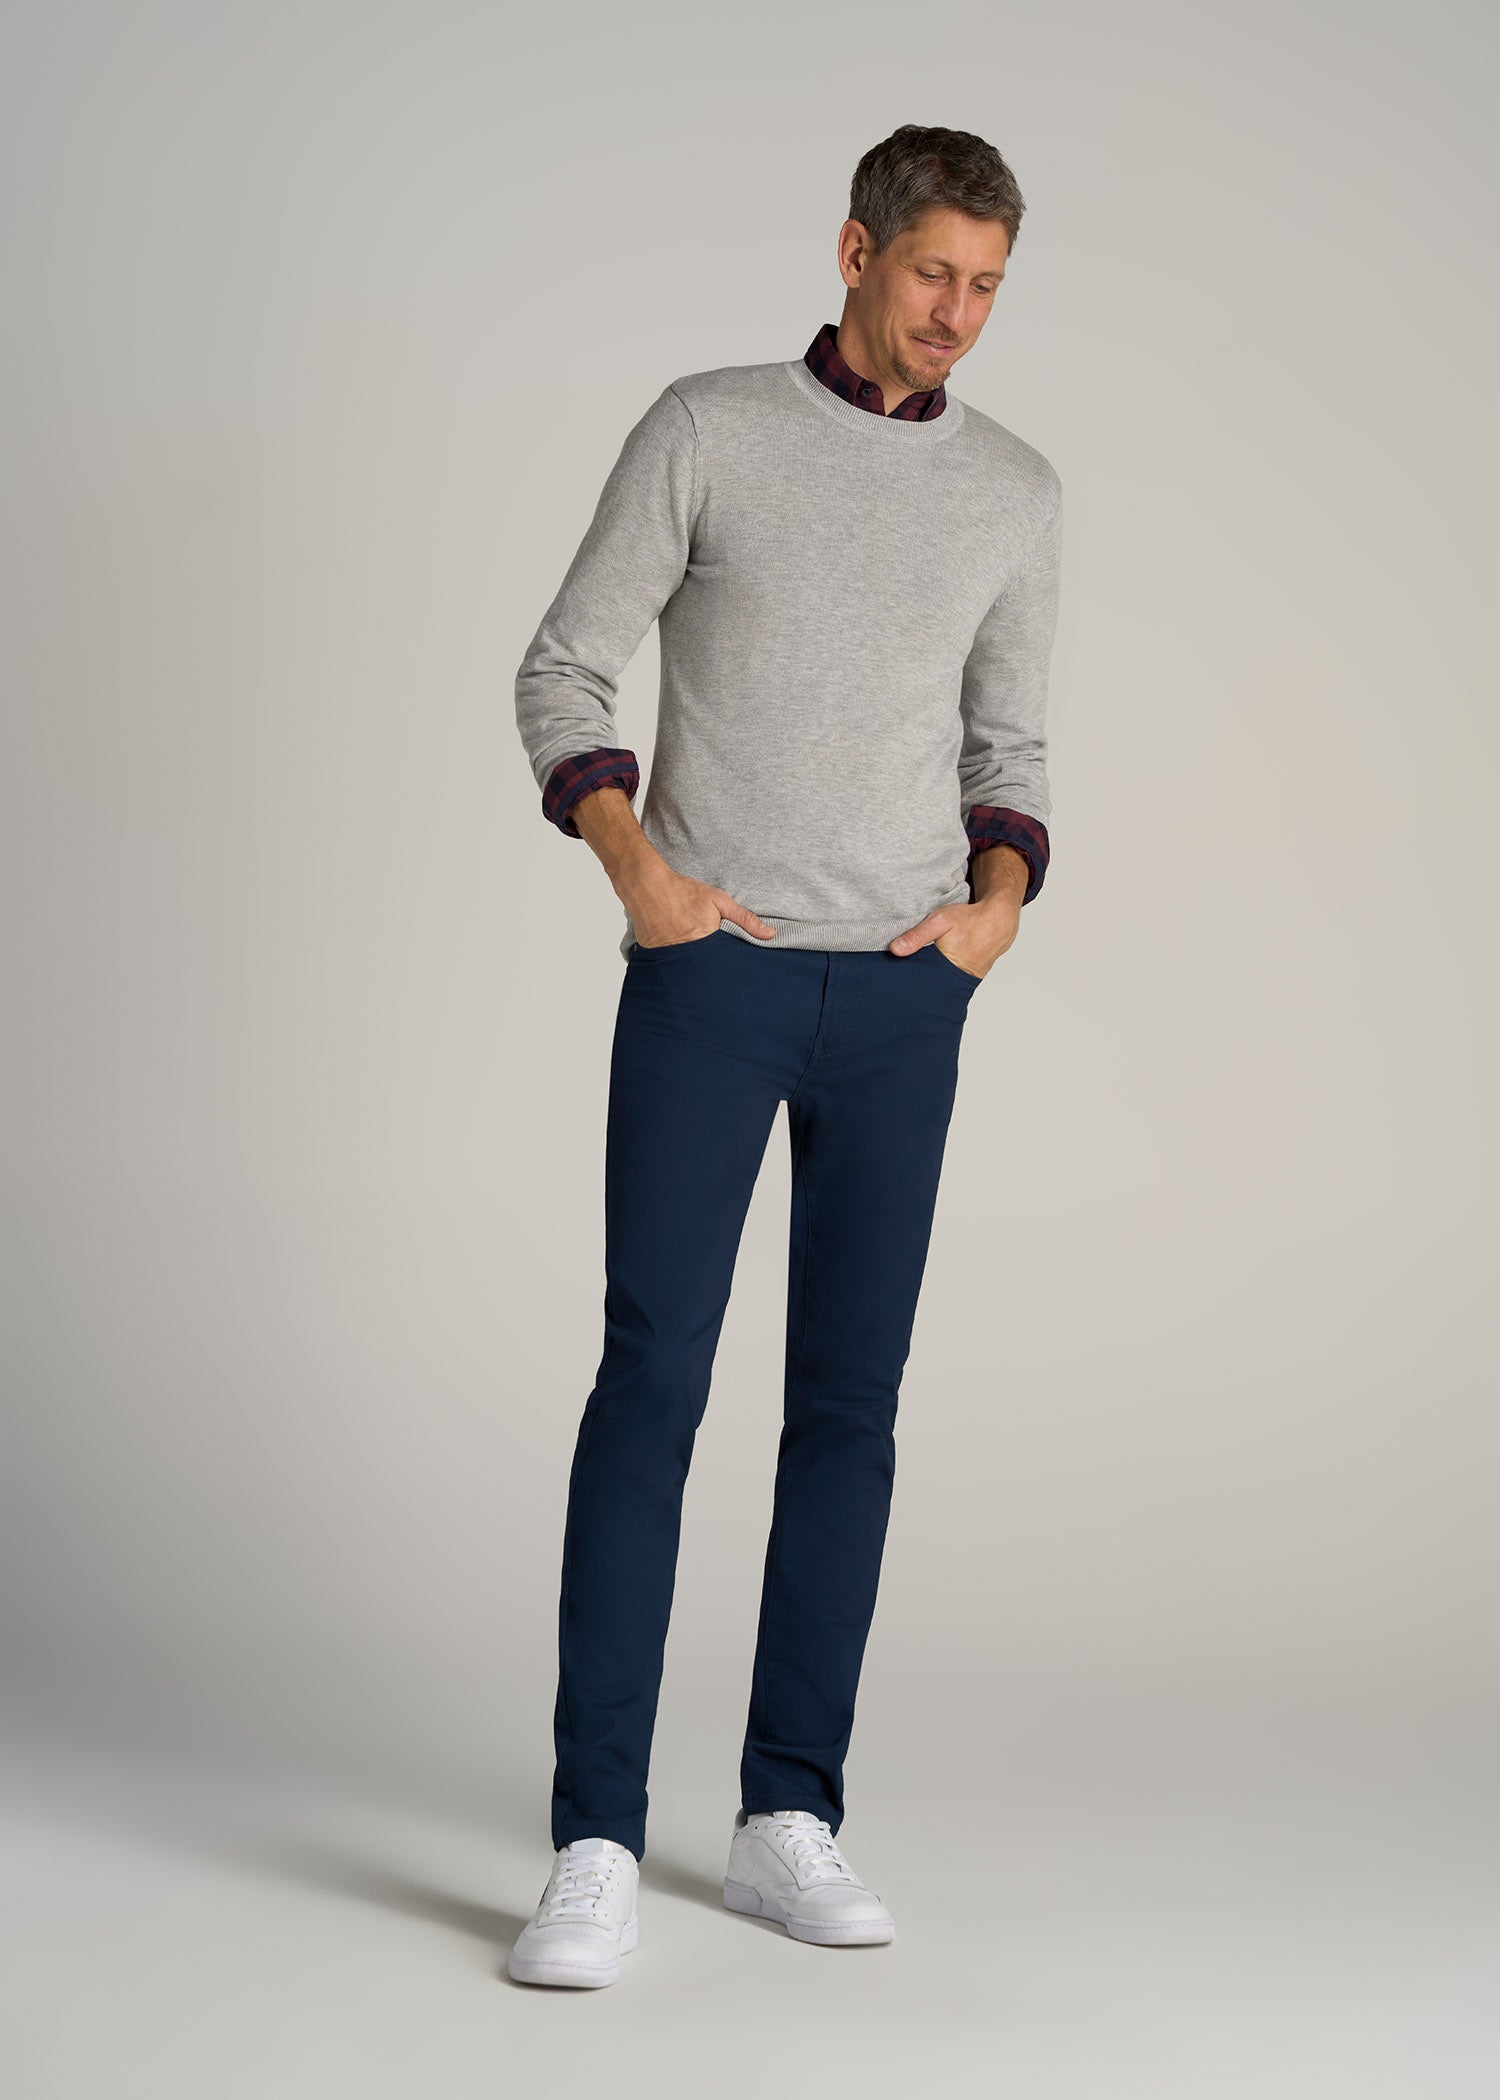       American-Tall-Men-Everyday-Crewneck-Sweater-Grey-Mix-full